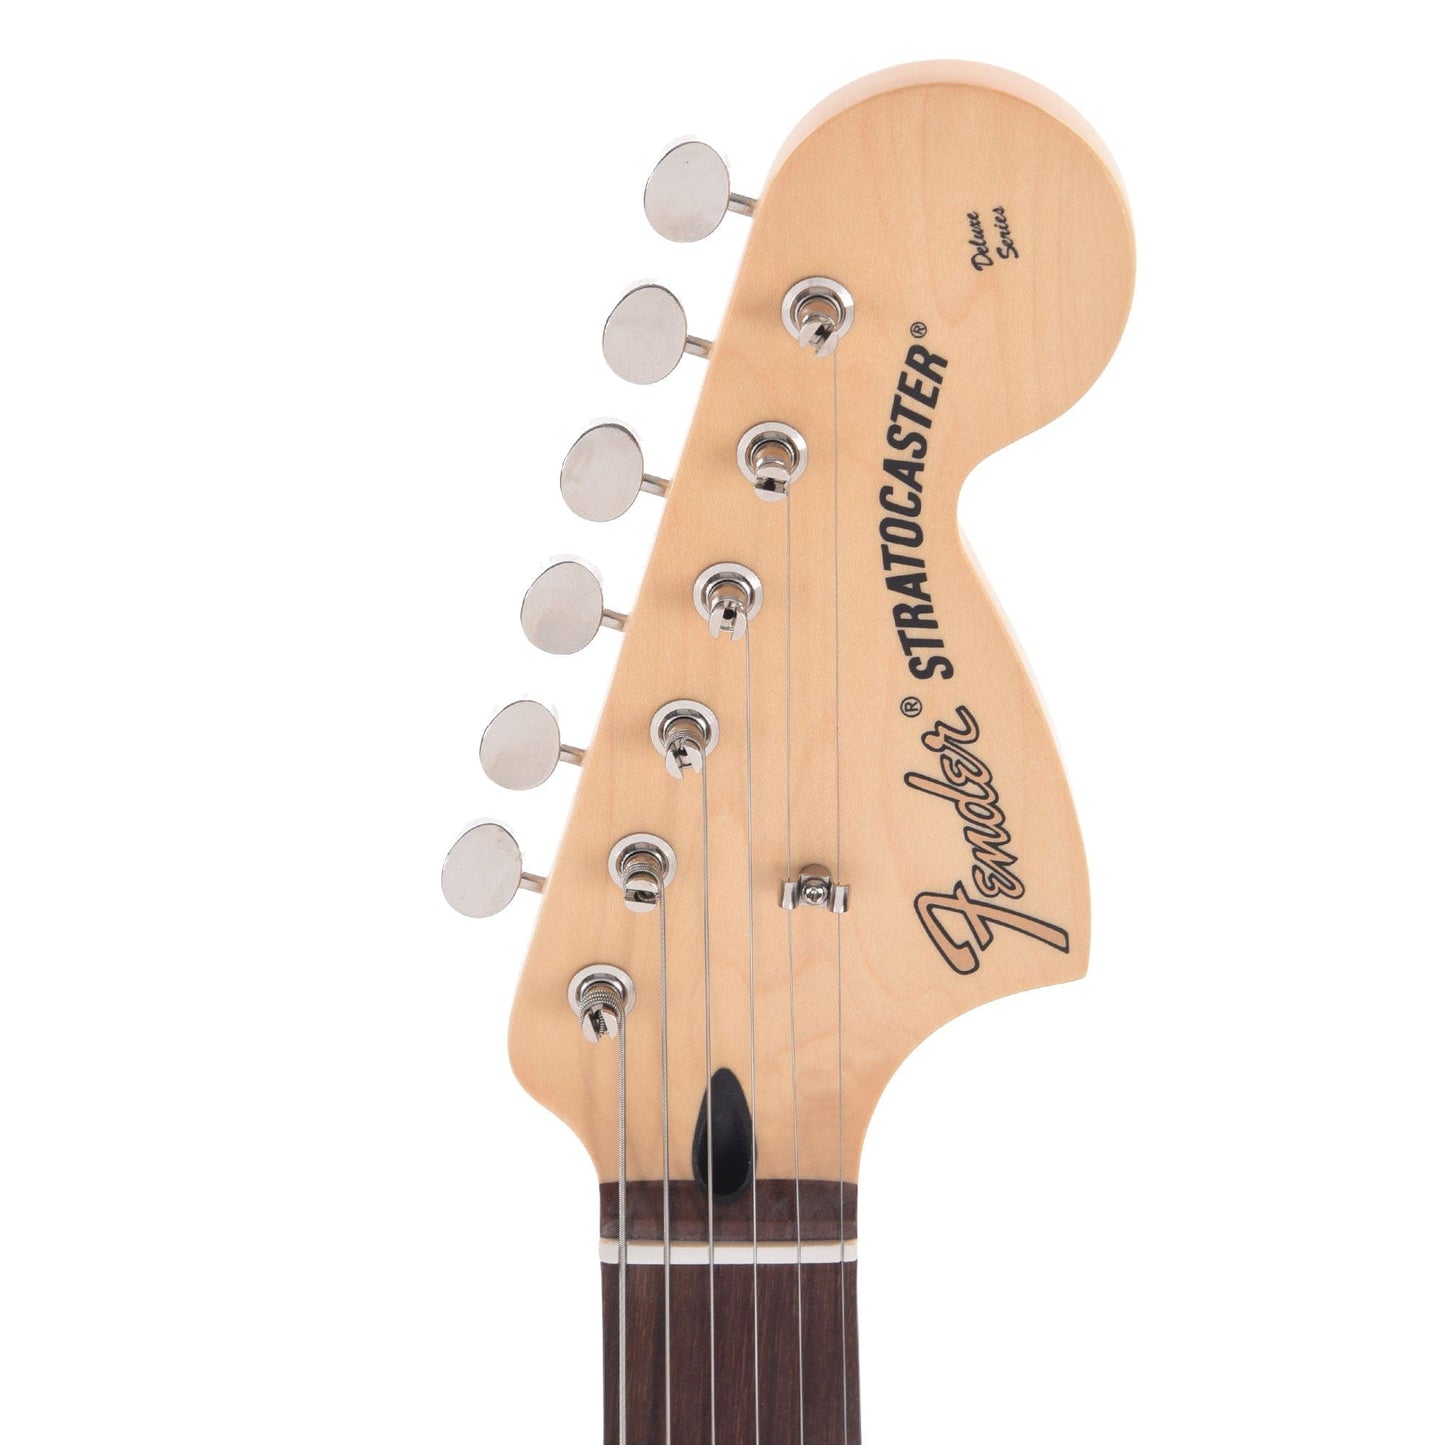 Fender Artist Limited Edition Tom DeLonge Stratocaster Graffiti Yellow Electric Guitars / Solid Body